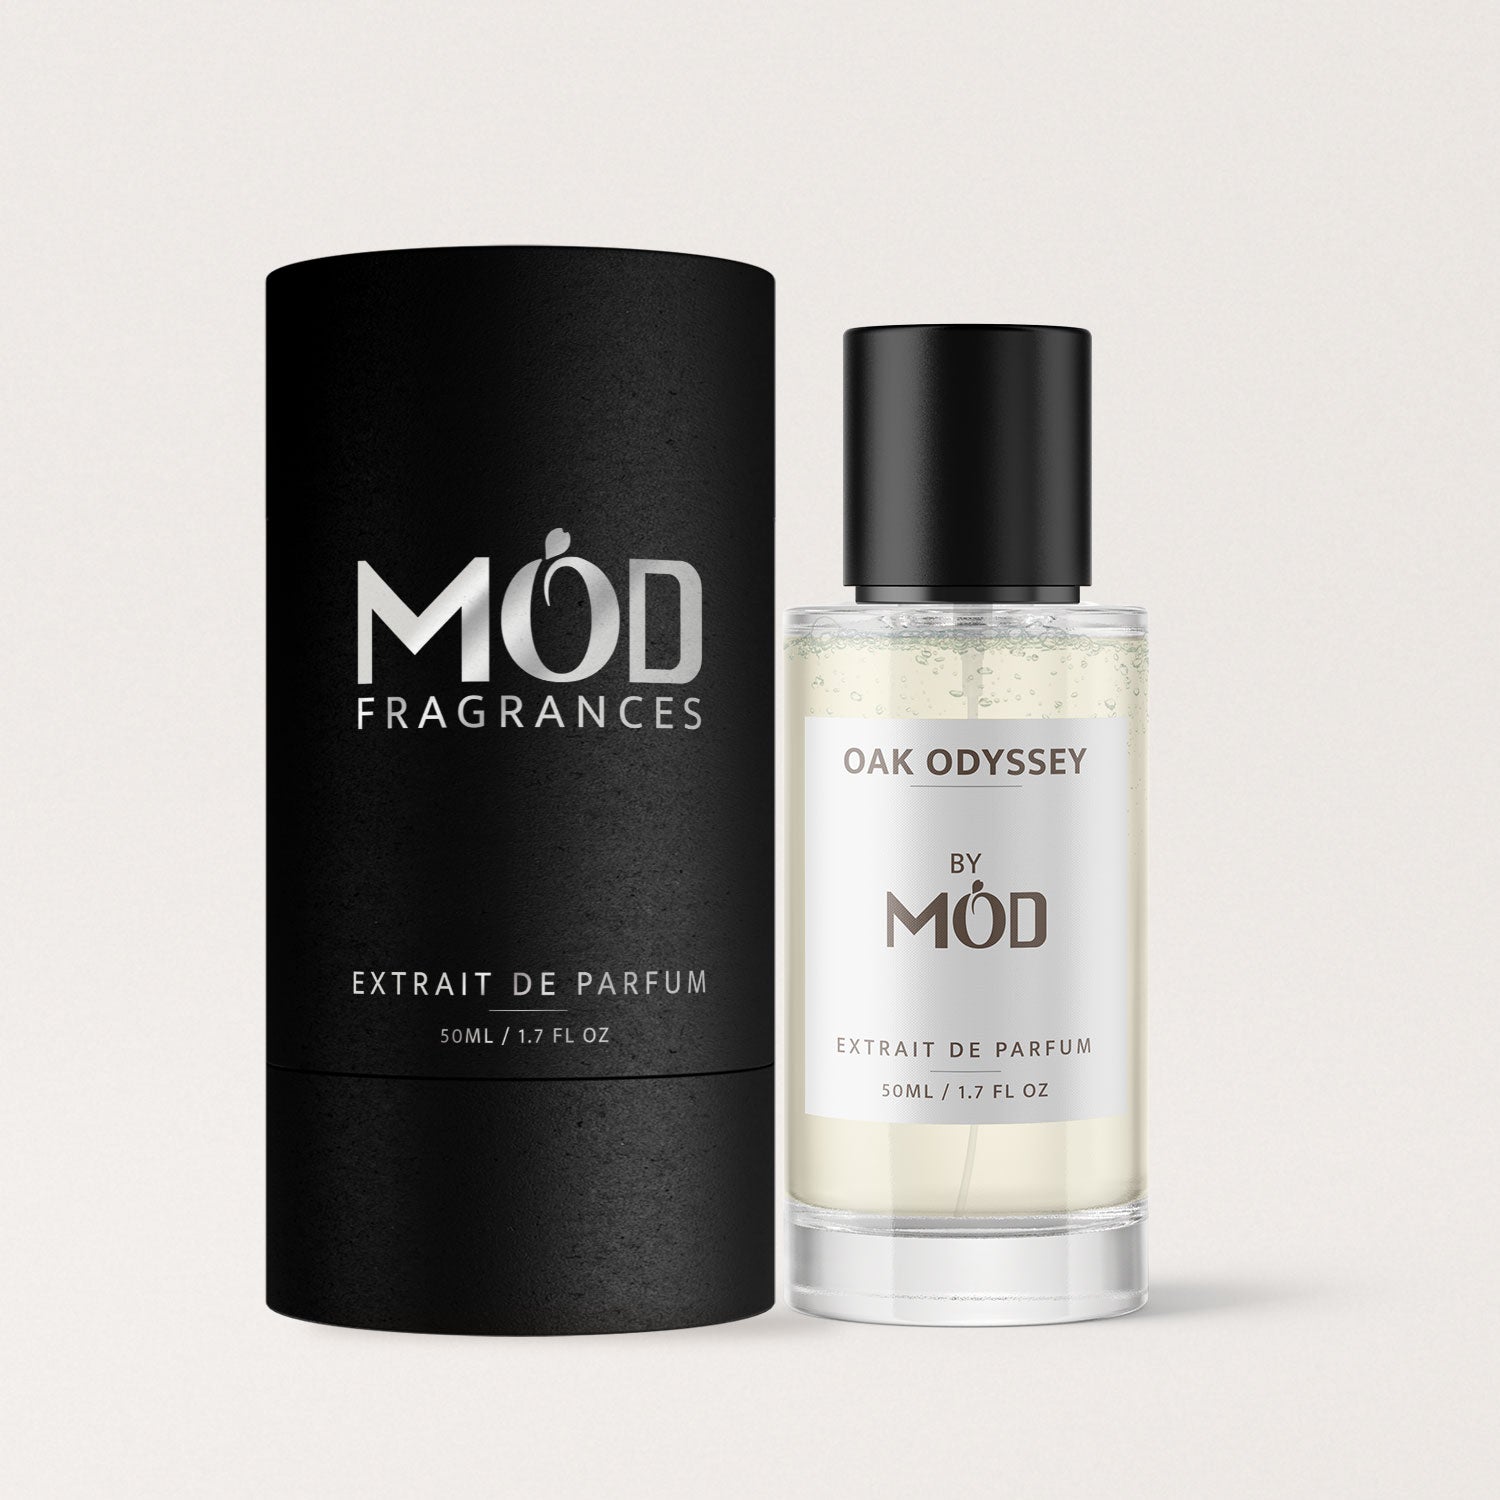 Oak Odyssey - Mod Fragrances